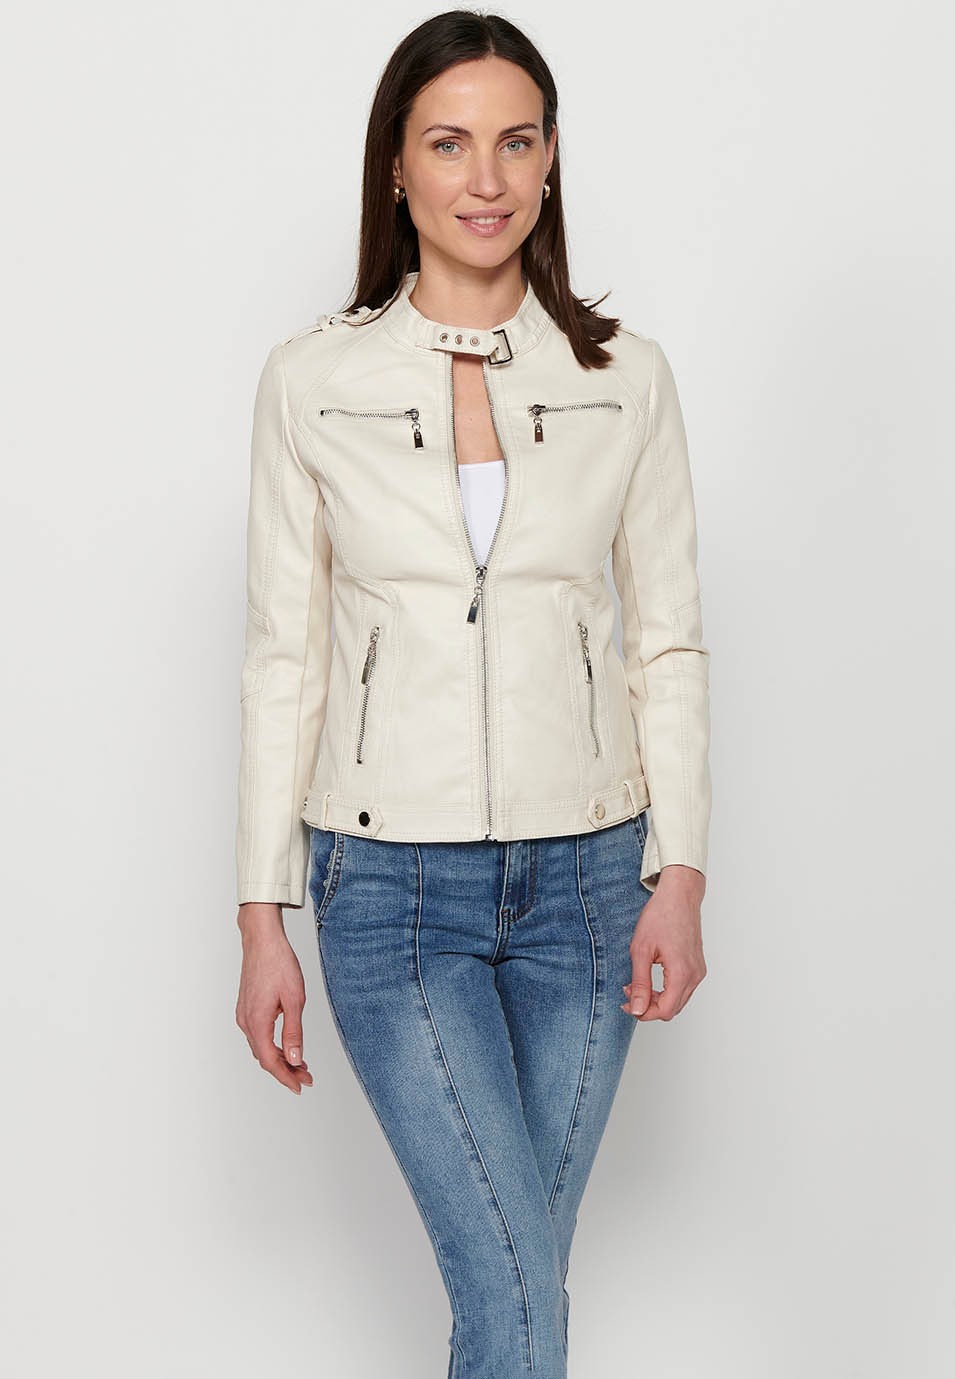 Long sleeve jacket, mandarin collar, off white color for women